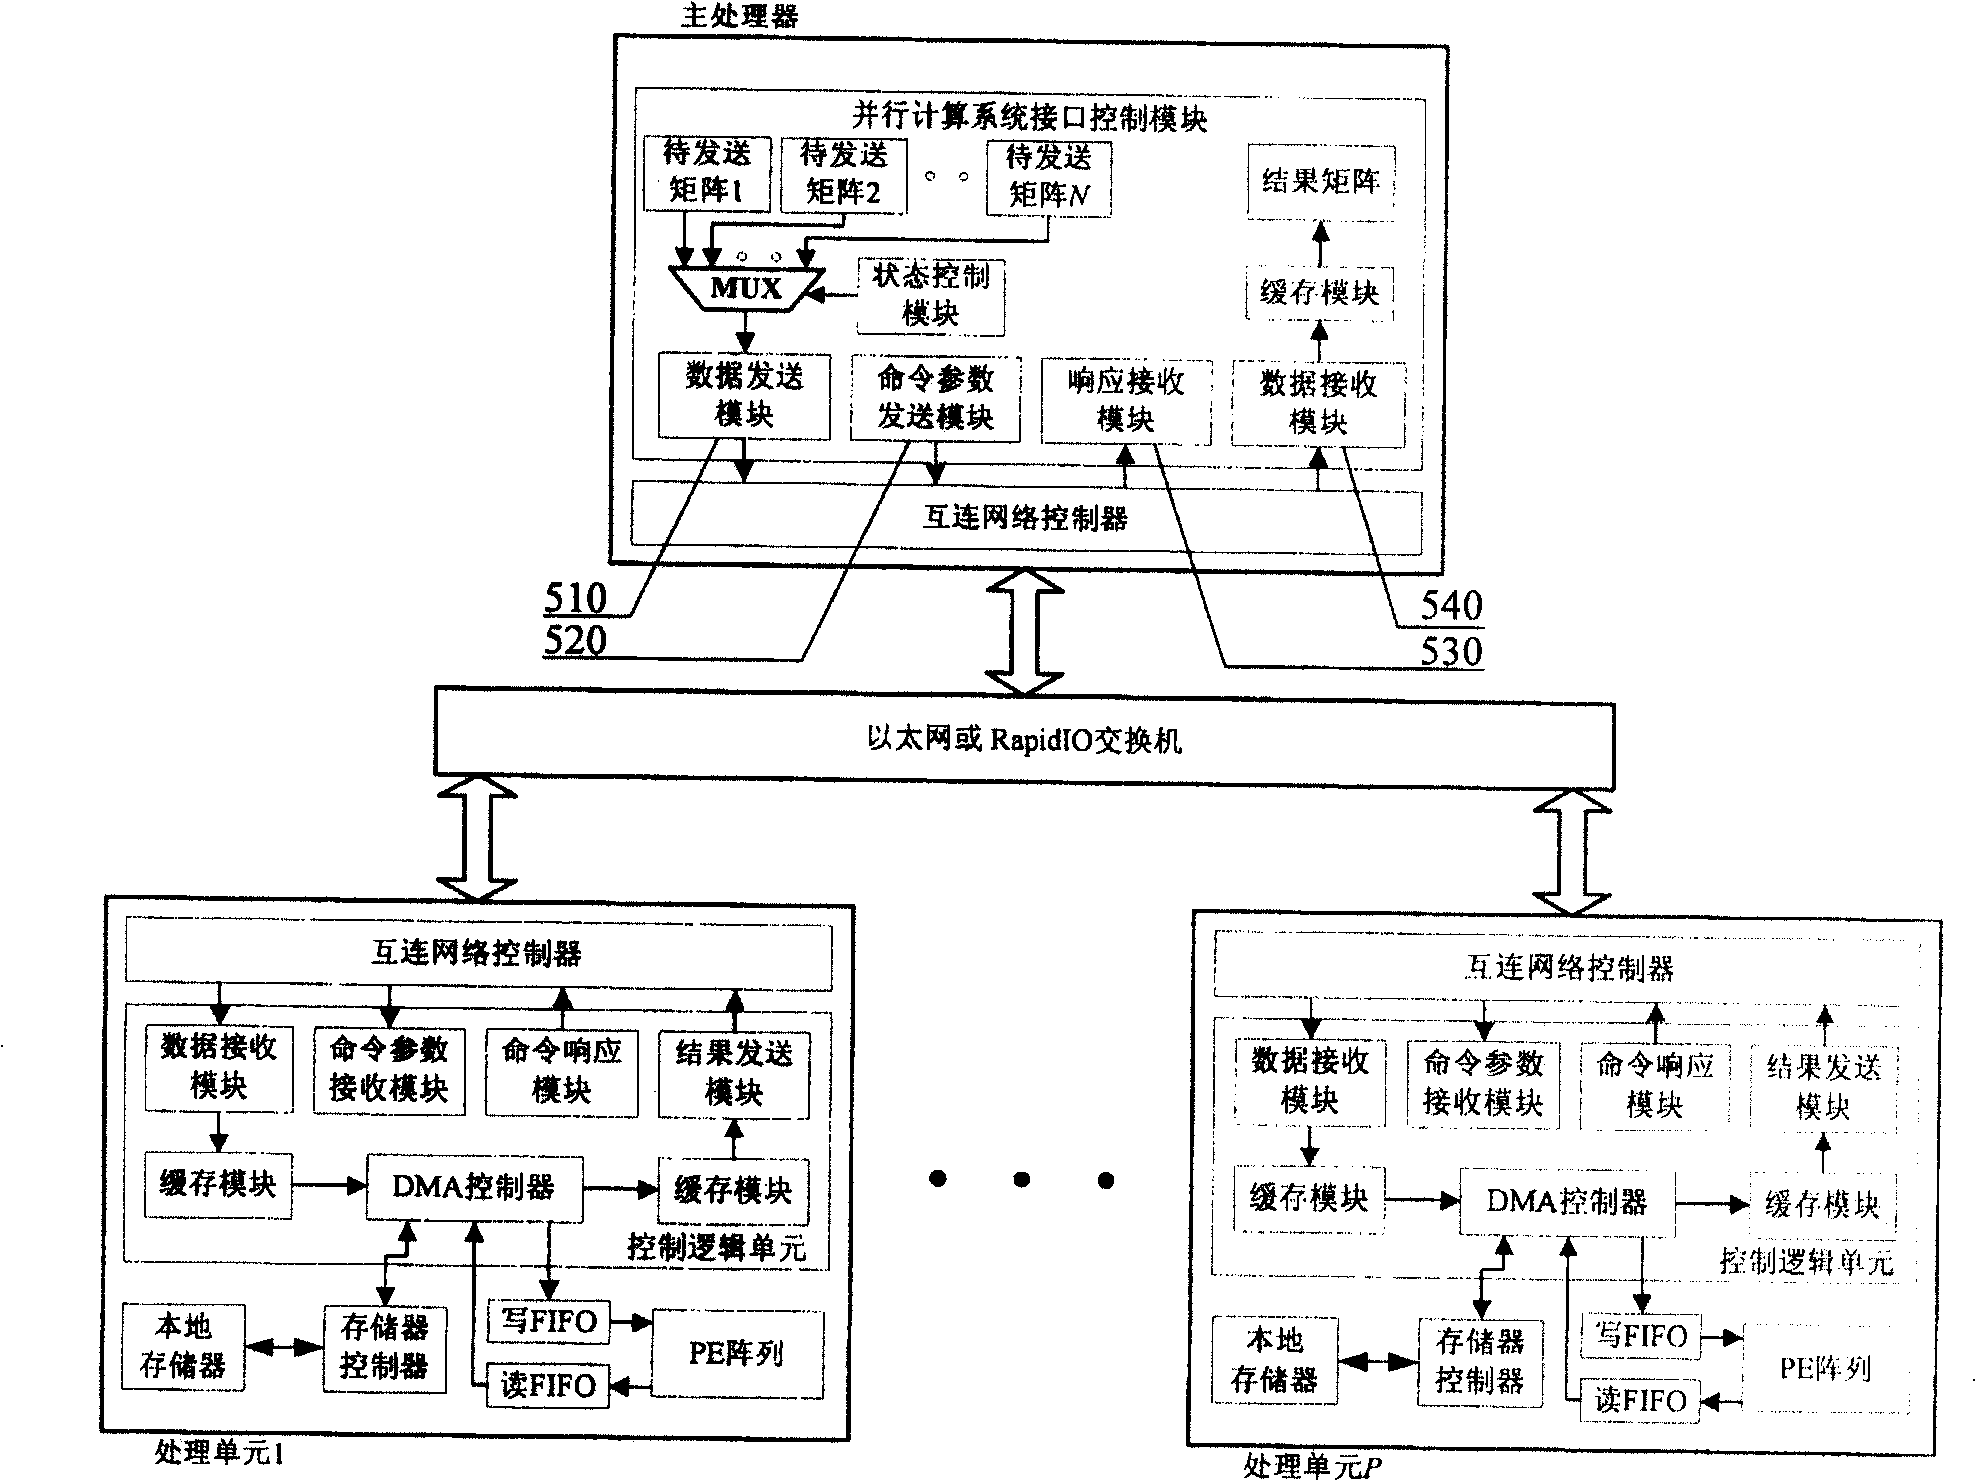 Matrix multiplication parallel computing system based on multi-FPGA